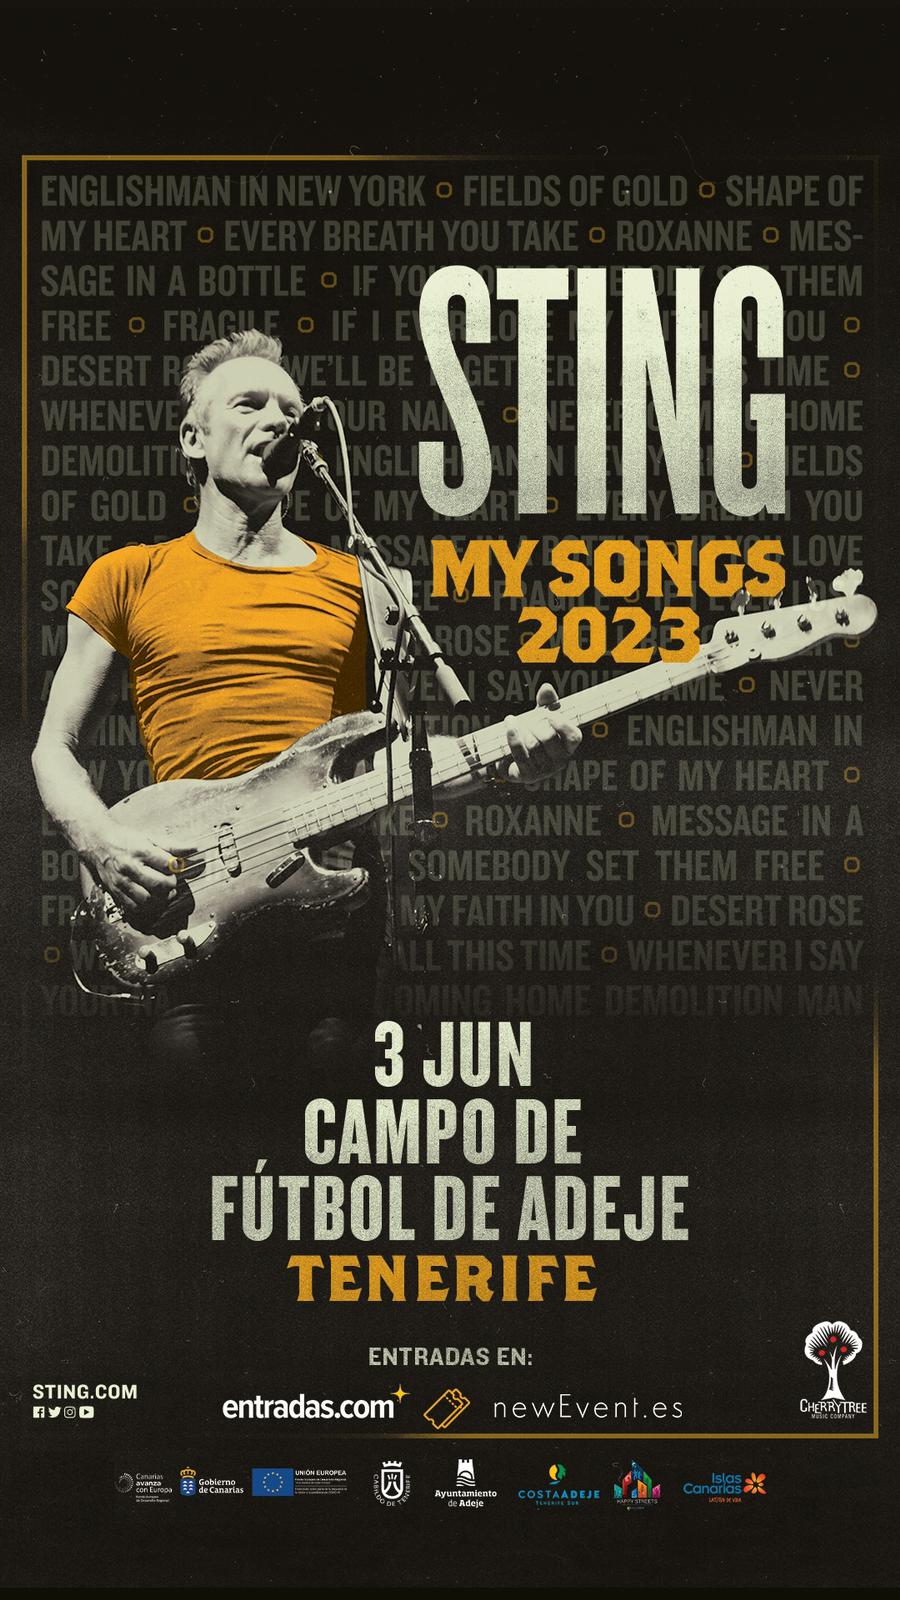 Gira "My Songs 2023" de Sting en Tenerife 